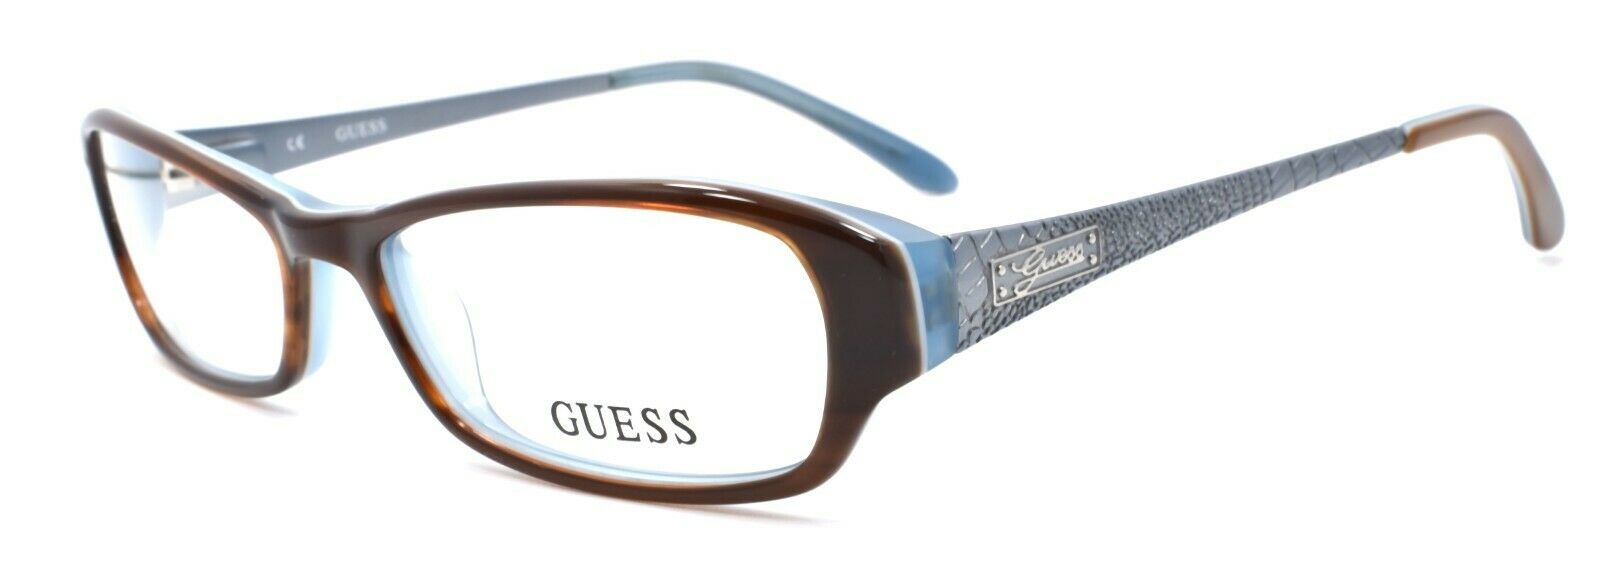 1-GUESS GU2203 BRNBL Women's Eyeglasses Frames 51-15-135 Brown / Blue + Case-715583307254-IKSpecs